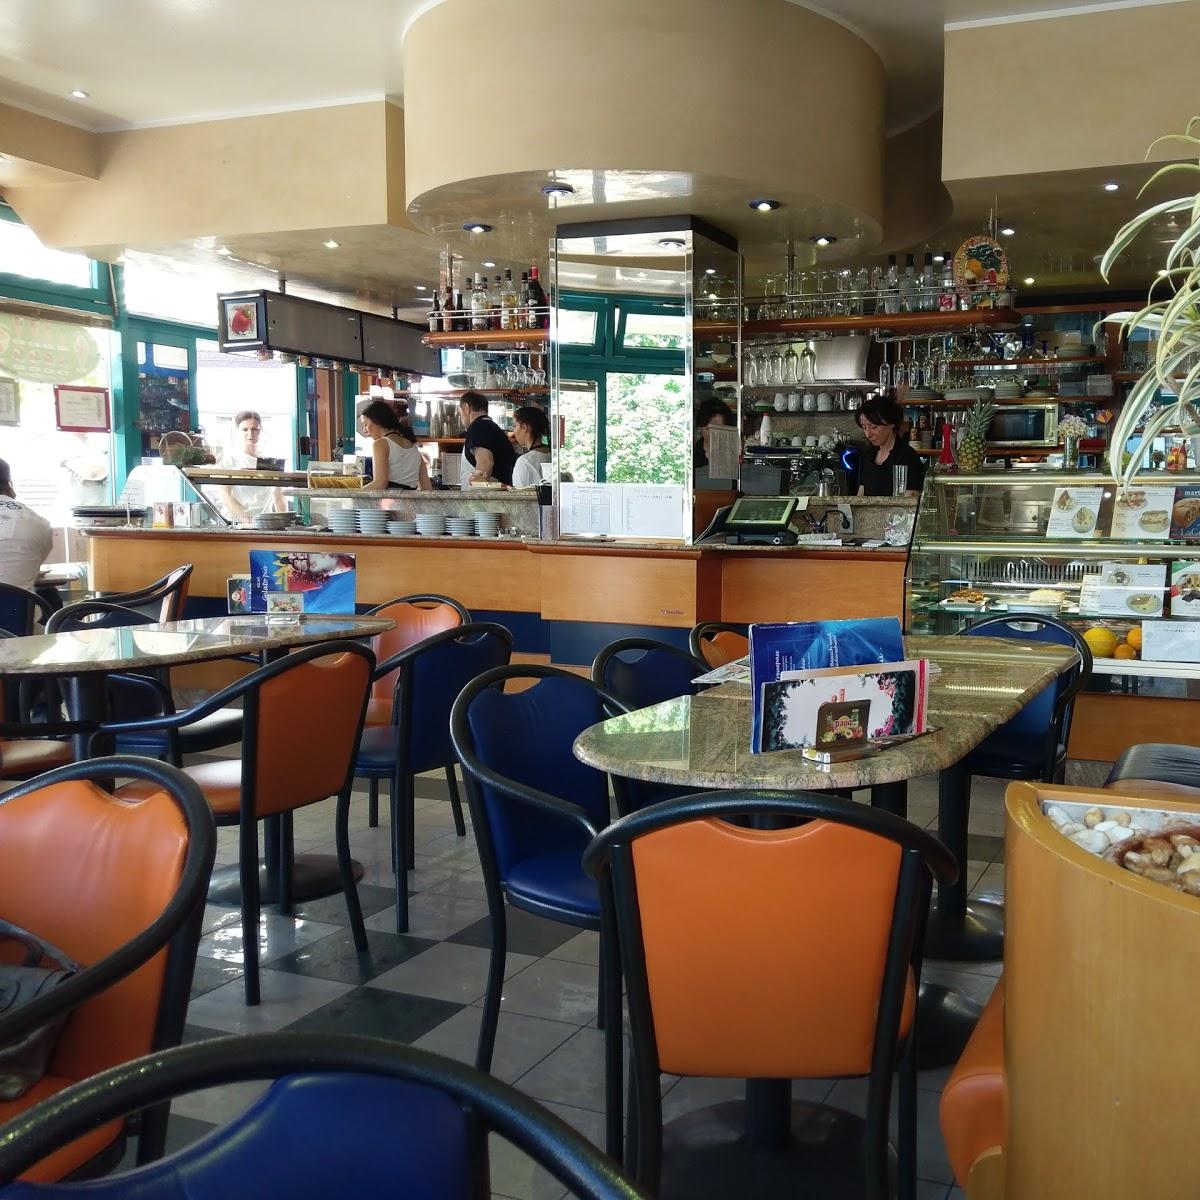 Restaurant "Eiscafé Gelato Piu